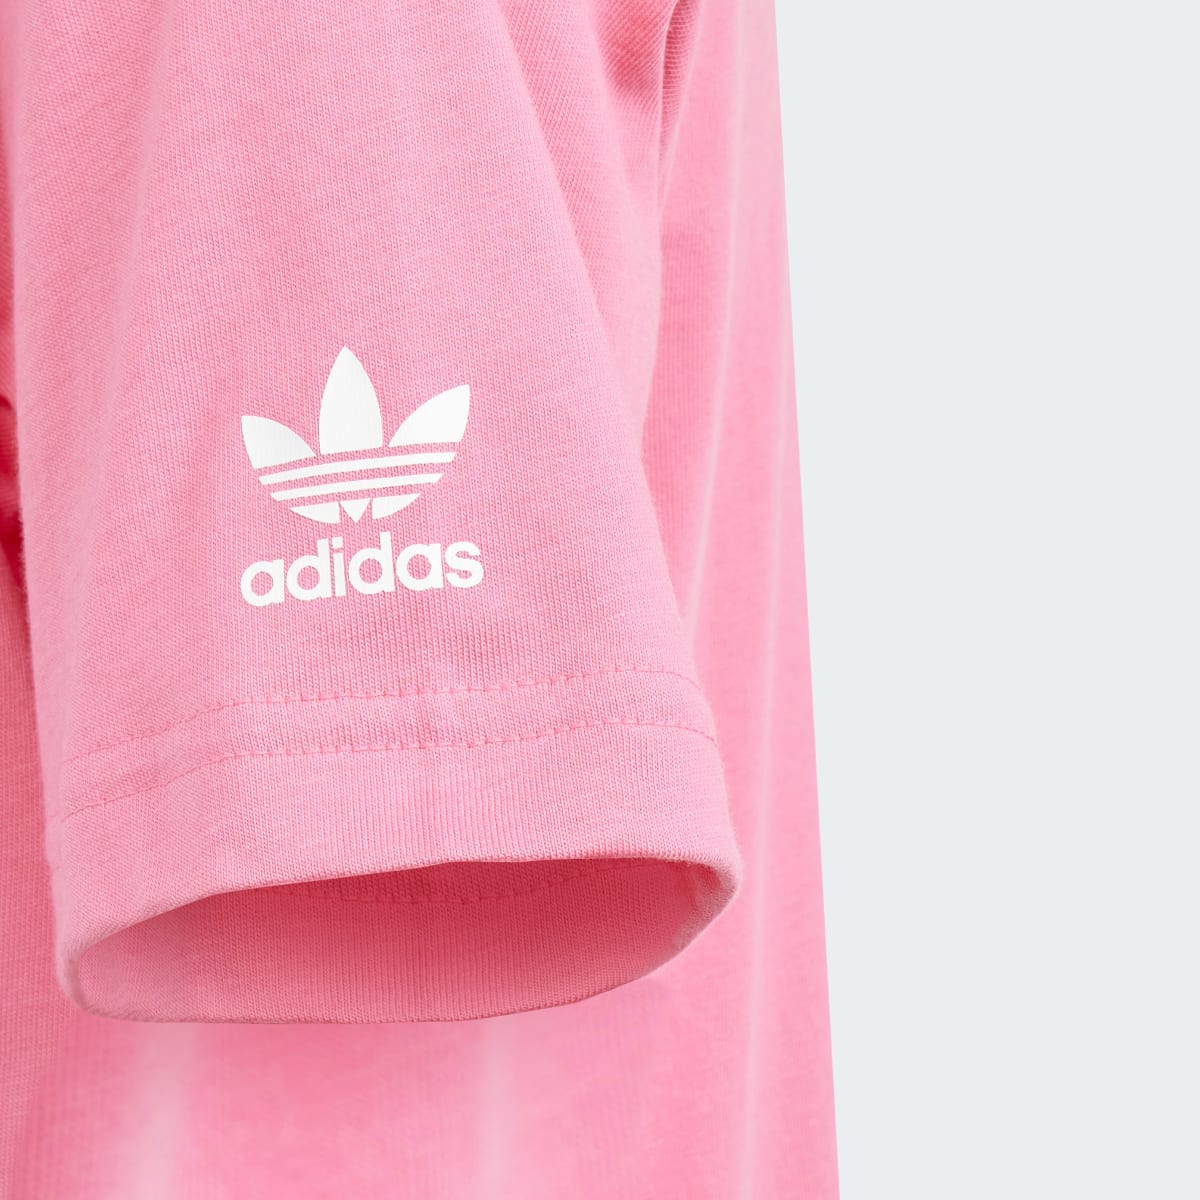 Adidas Originals x Hello Kitty Tee. 4